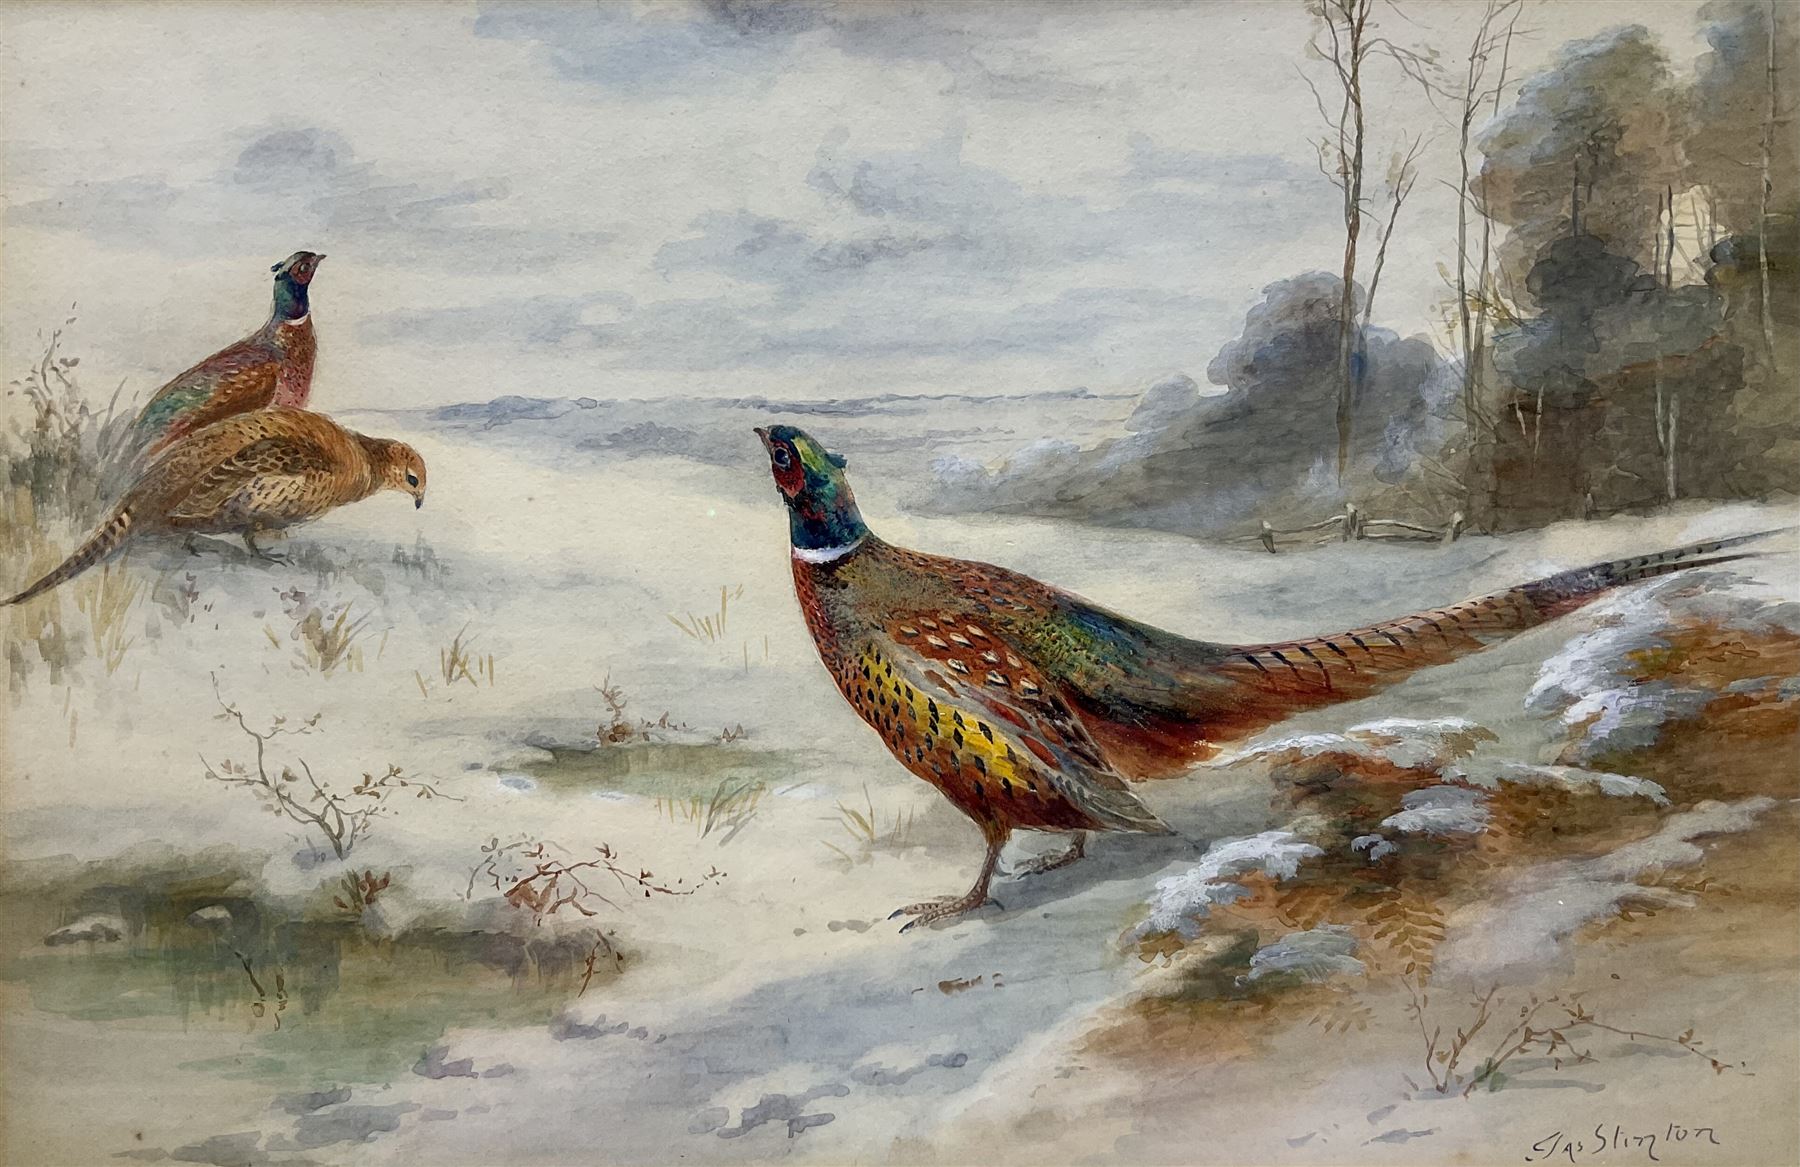 James Stinton (British 1870-1961): Pheasants in a Winter Landscape